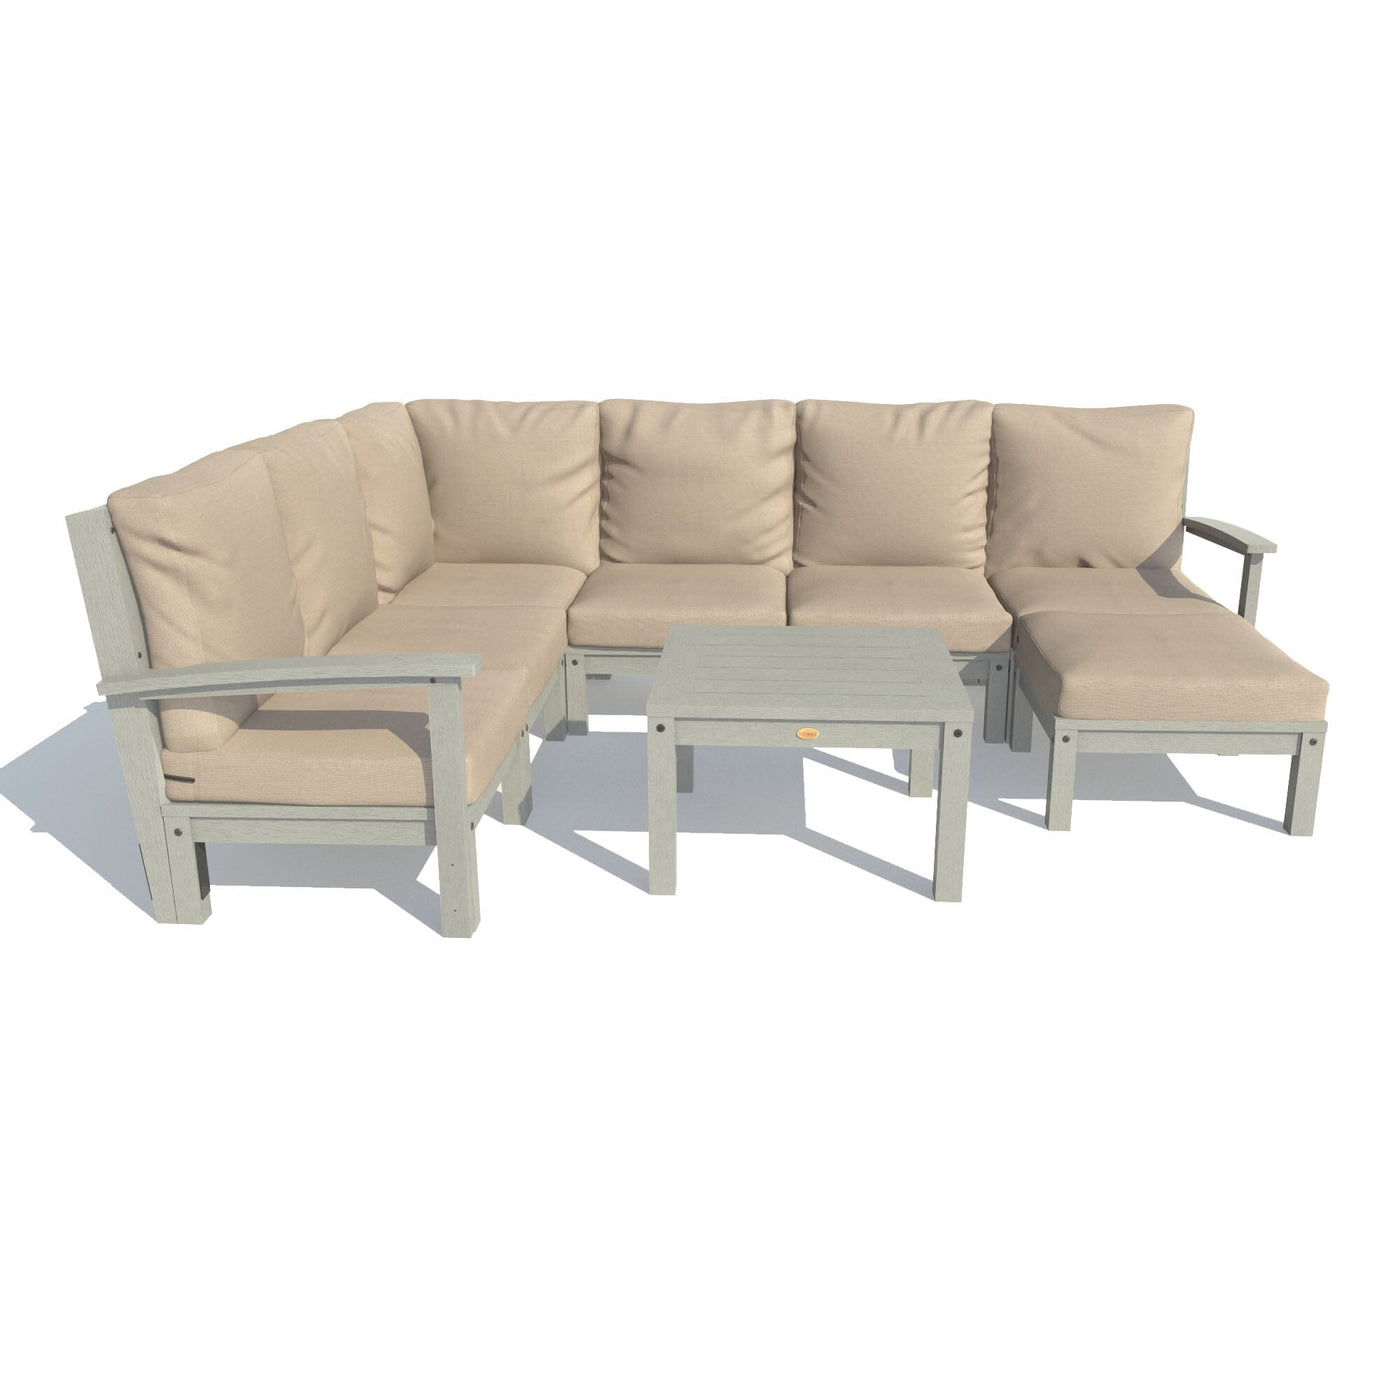 Bespoke Deep Seating: 8 Piece Sectional Sofa Set with Ottoman and Side Table Deep Seating Highwood USA Driftwood Coastal Teak 